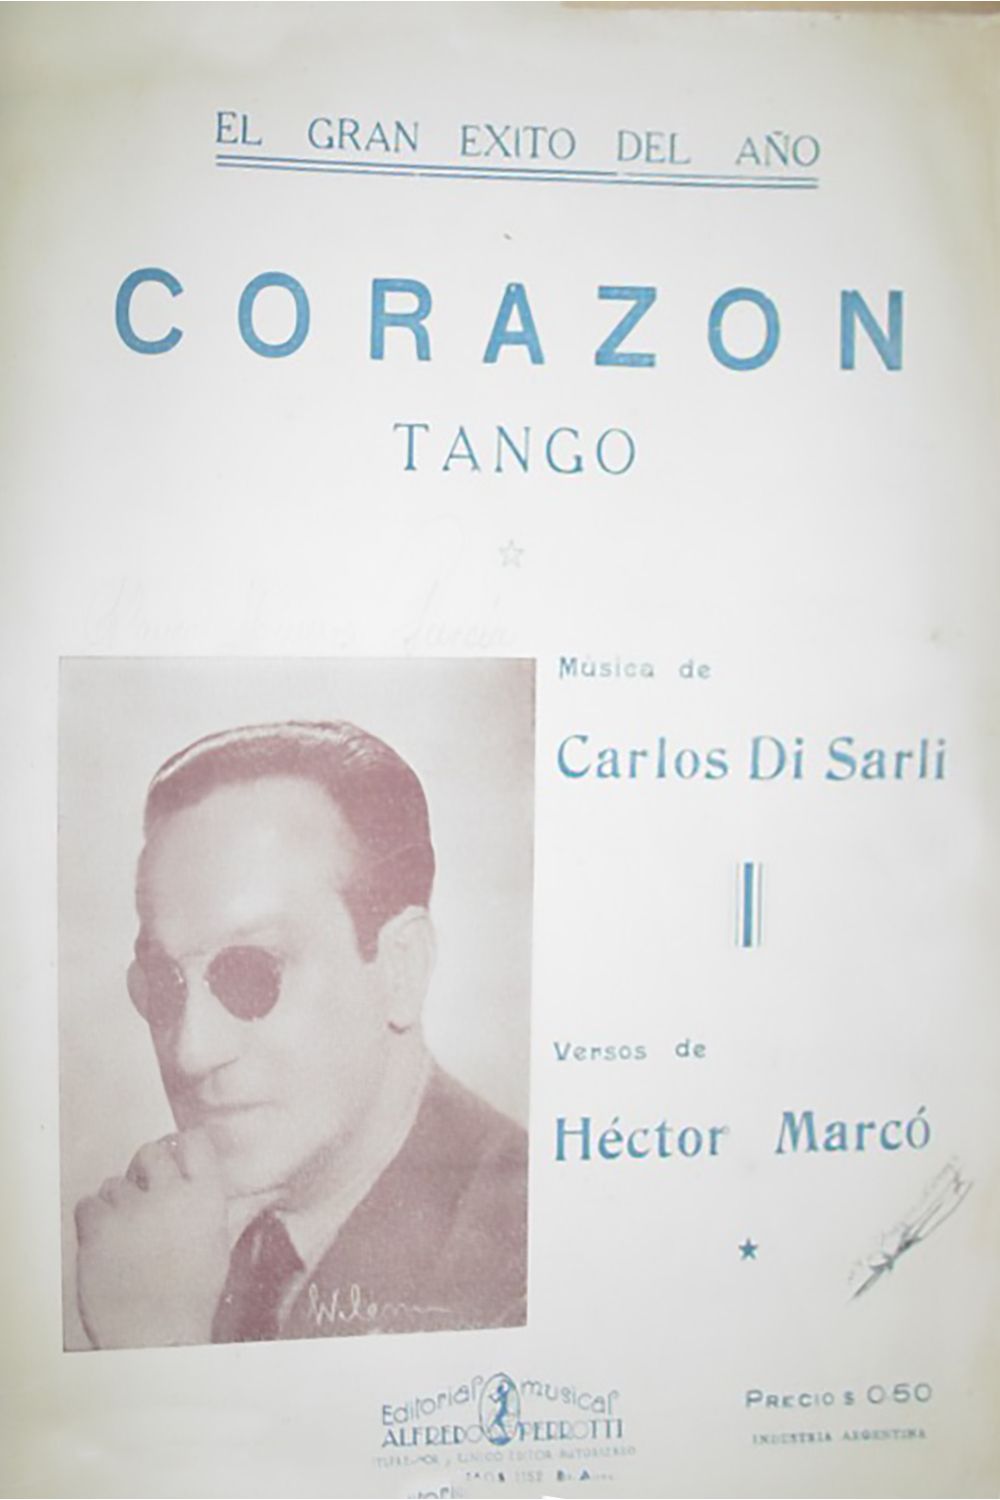 "Corazón", Argentine Tango music sheet cover.